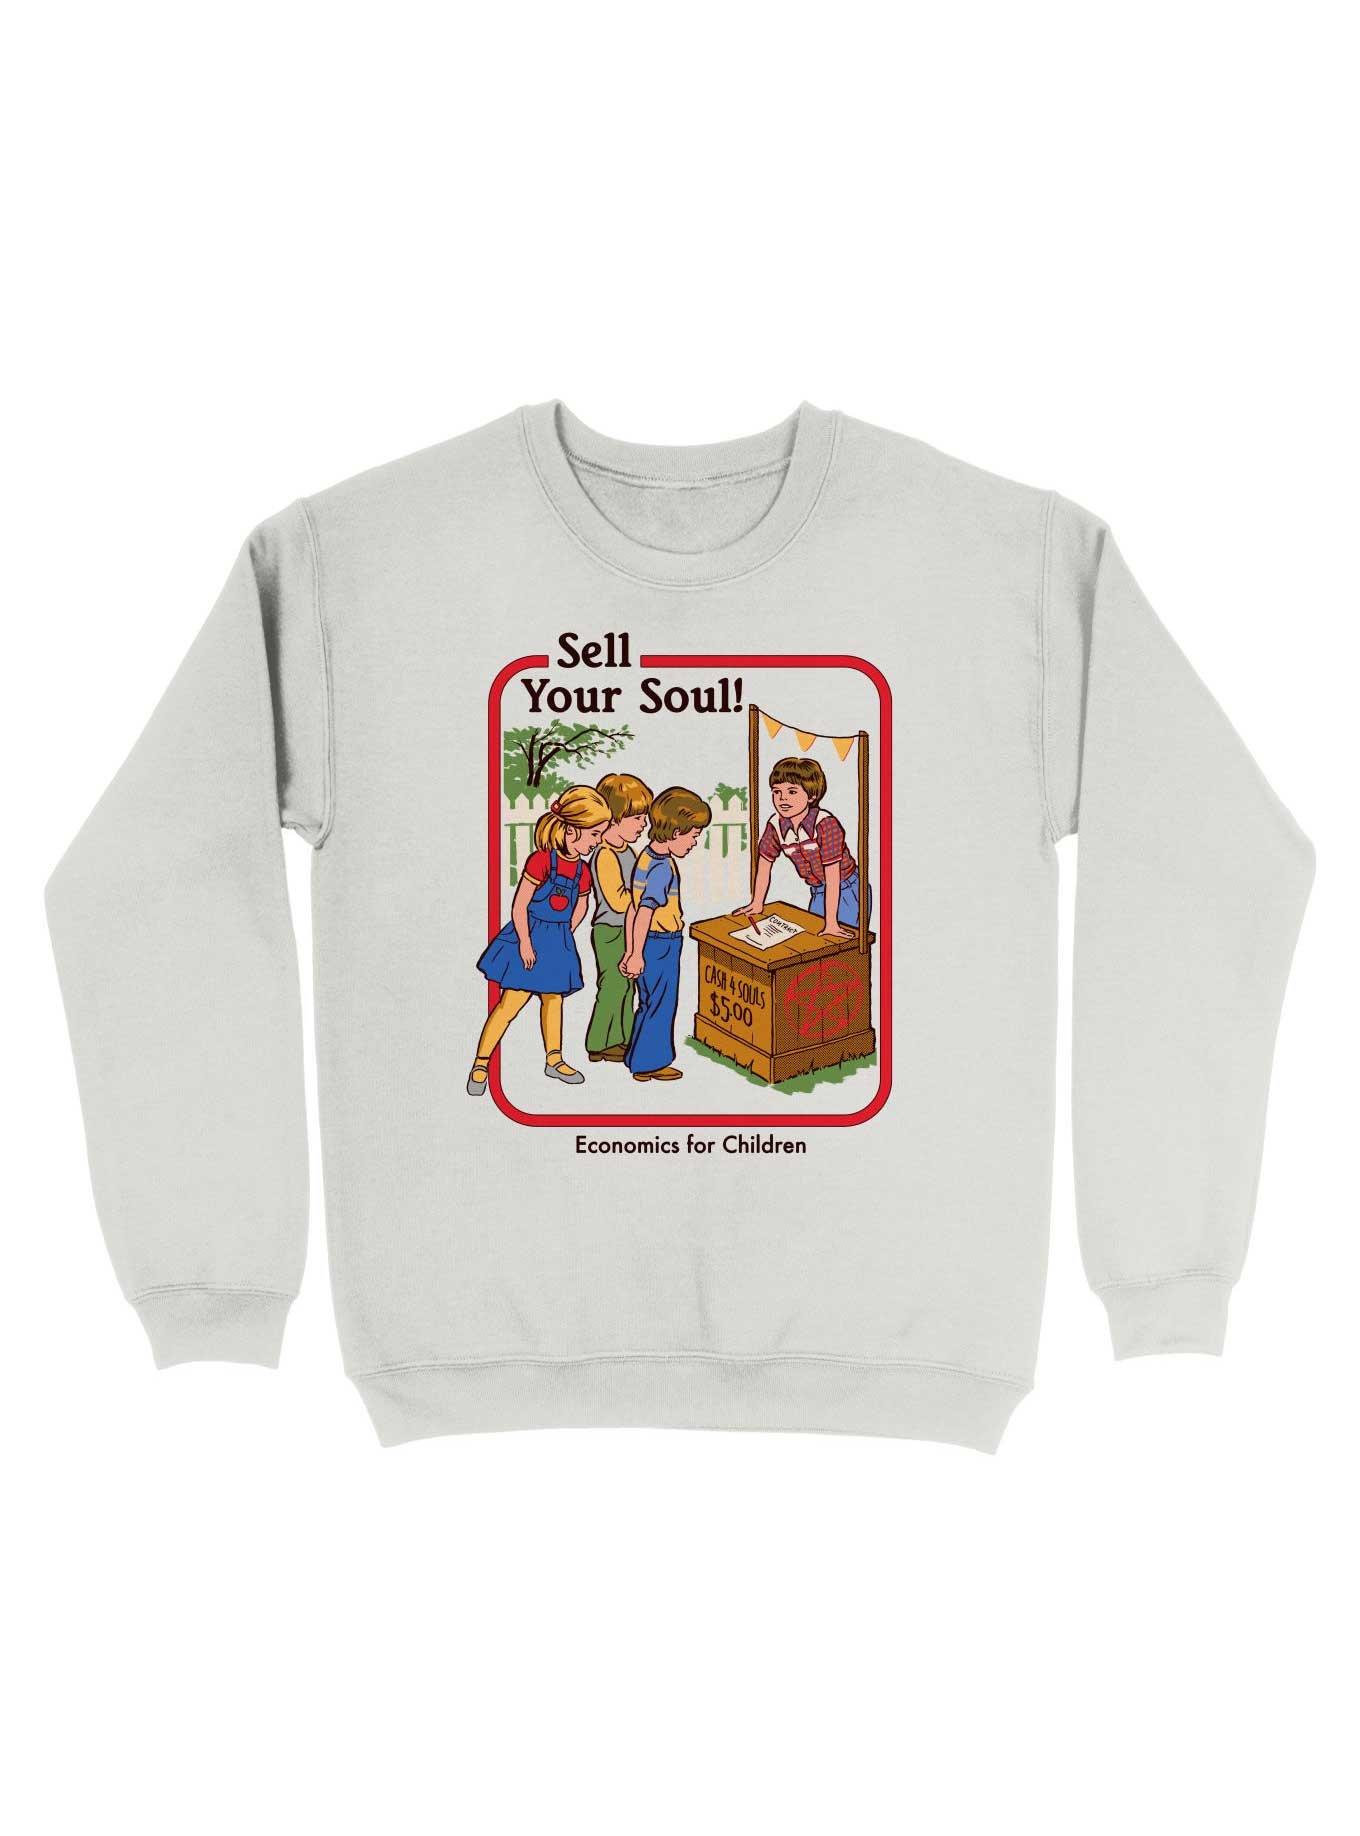 Sell Your Soul Sweatshirt By Steven Rhodes